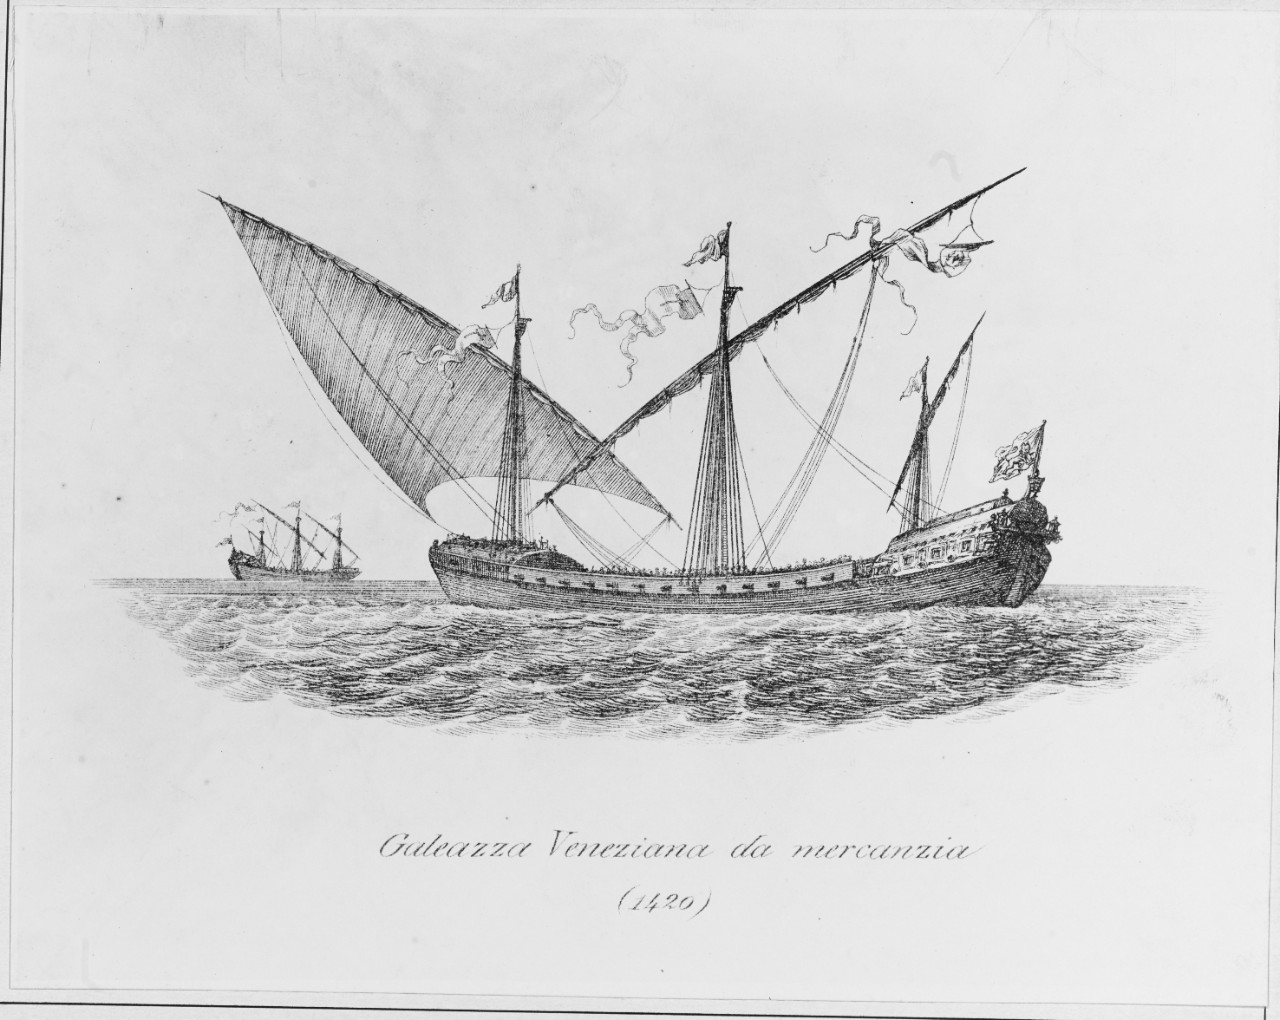 Italian Venetian Merchant Vessel.